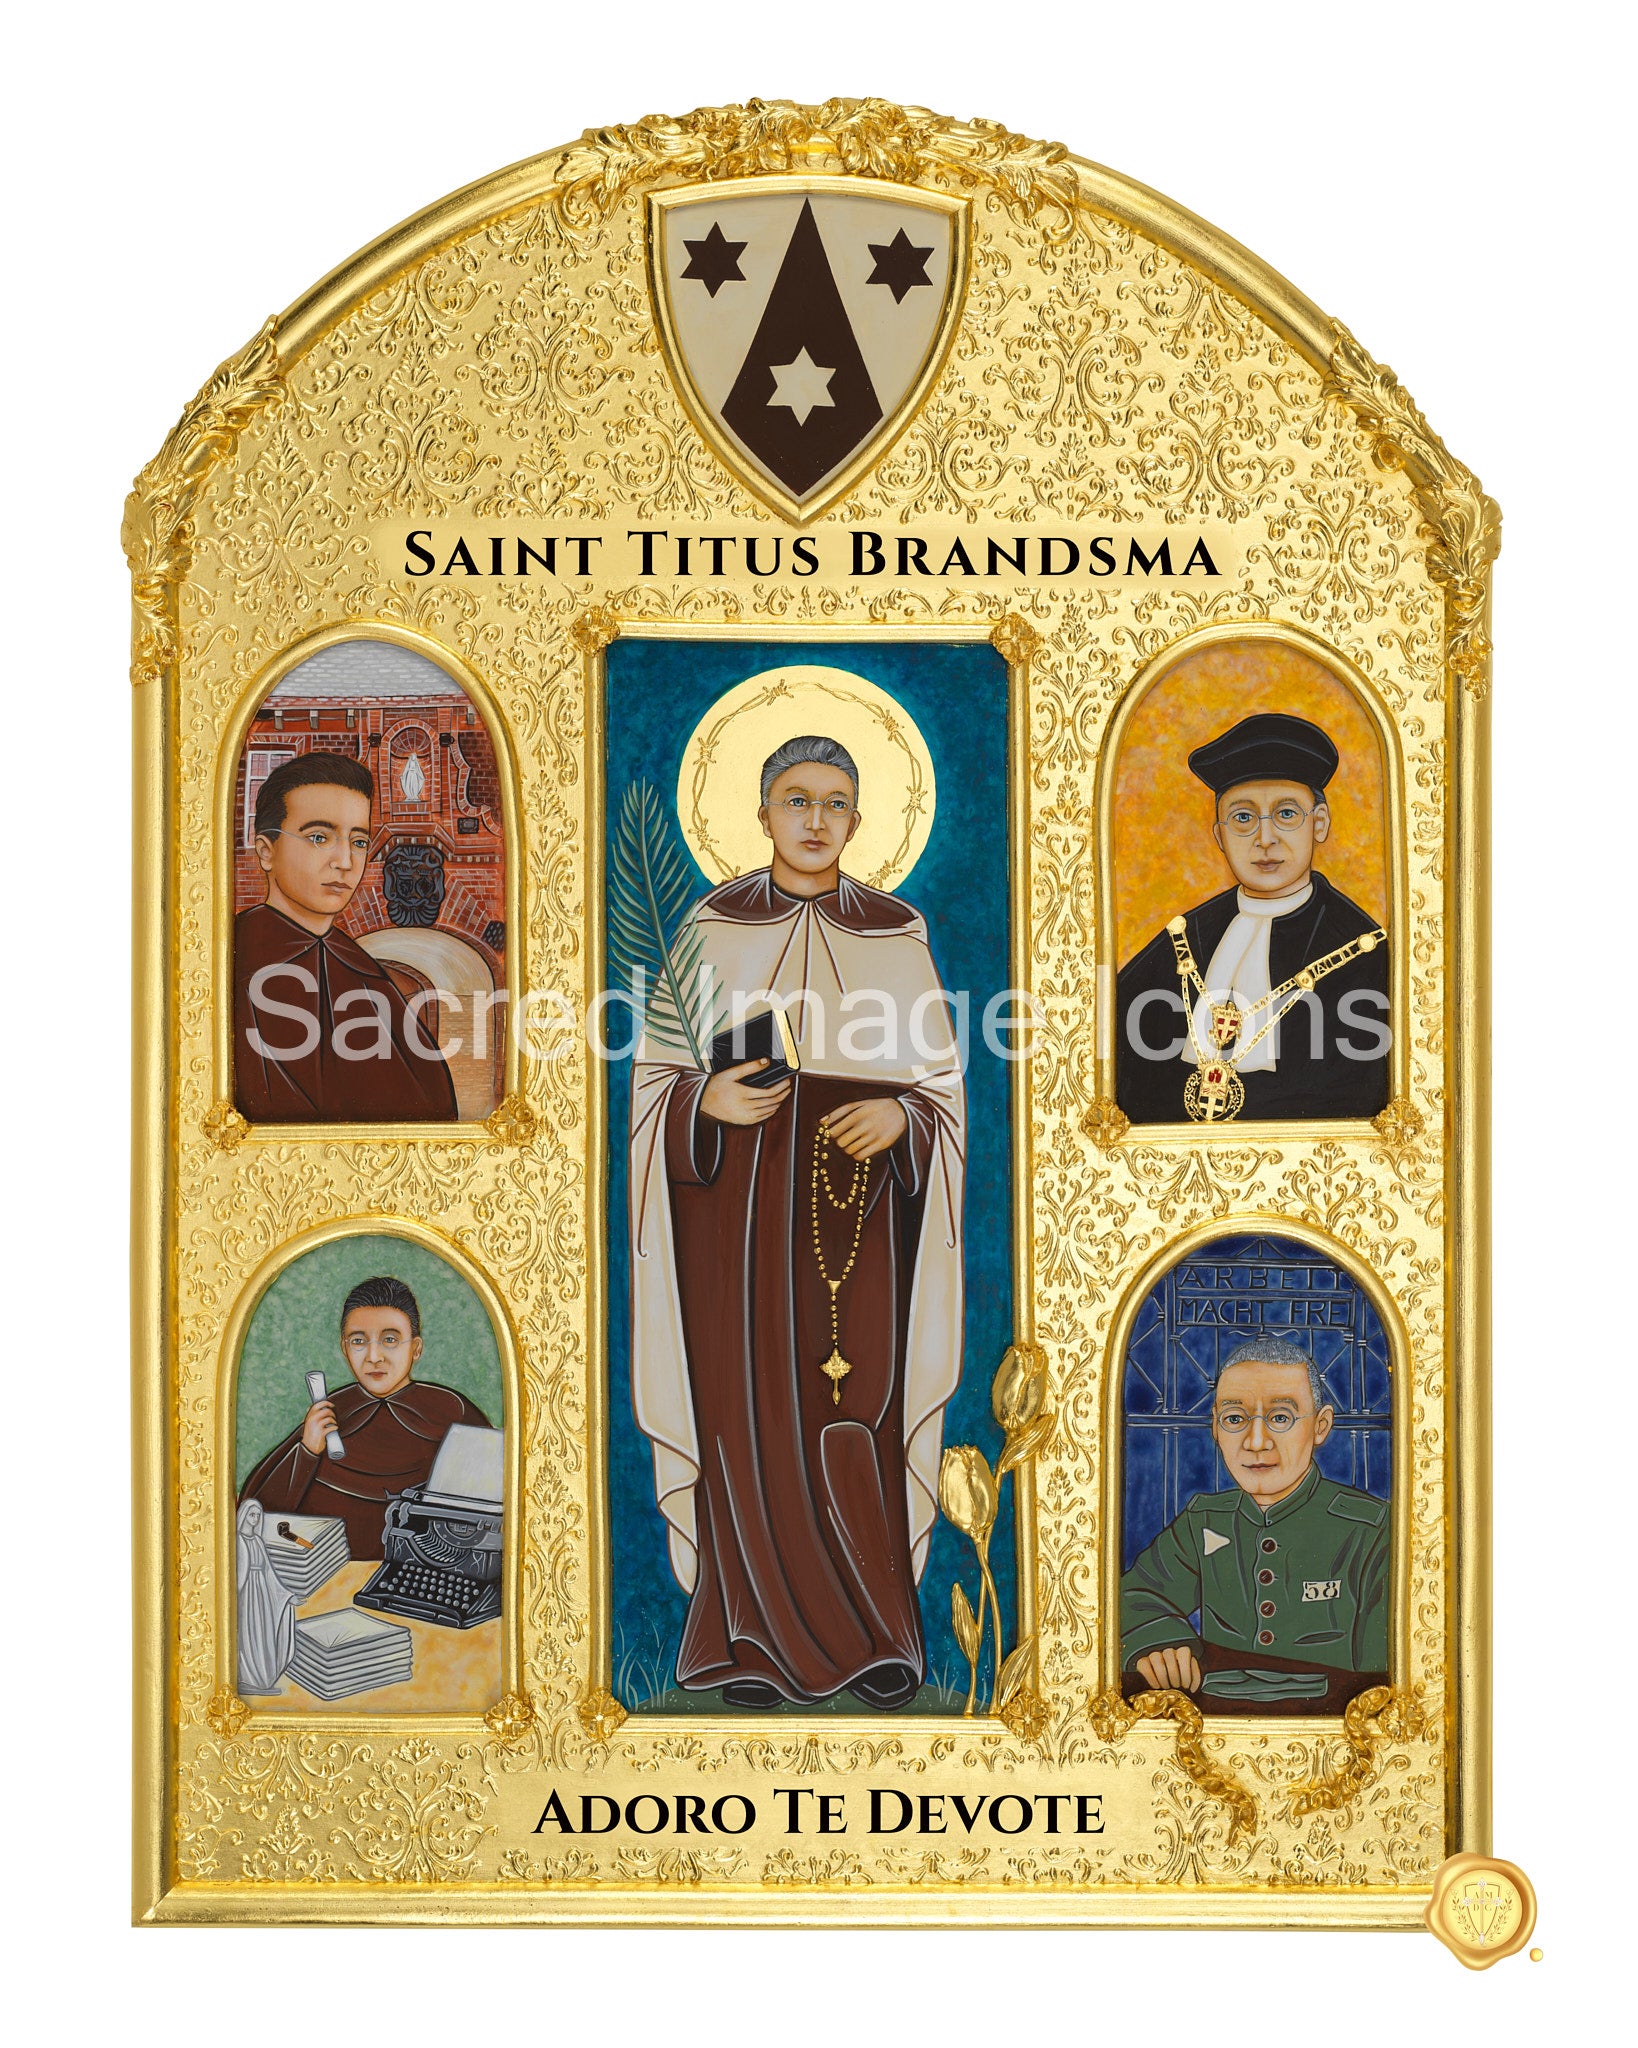 Saint Titus Brandsma